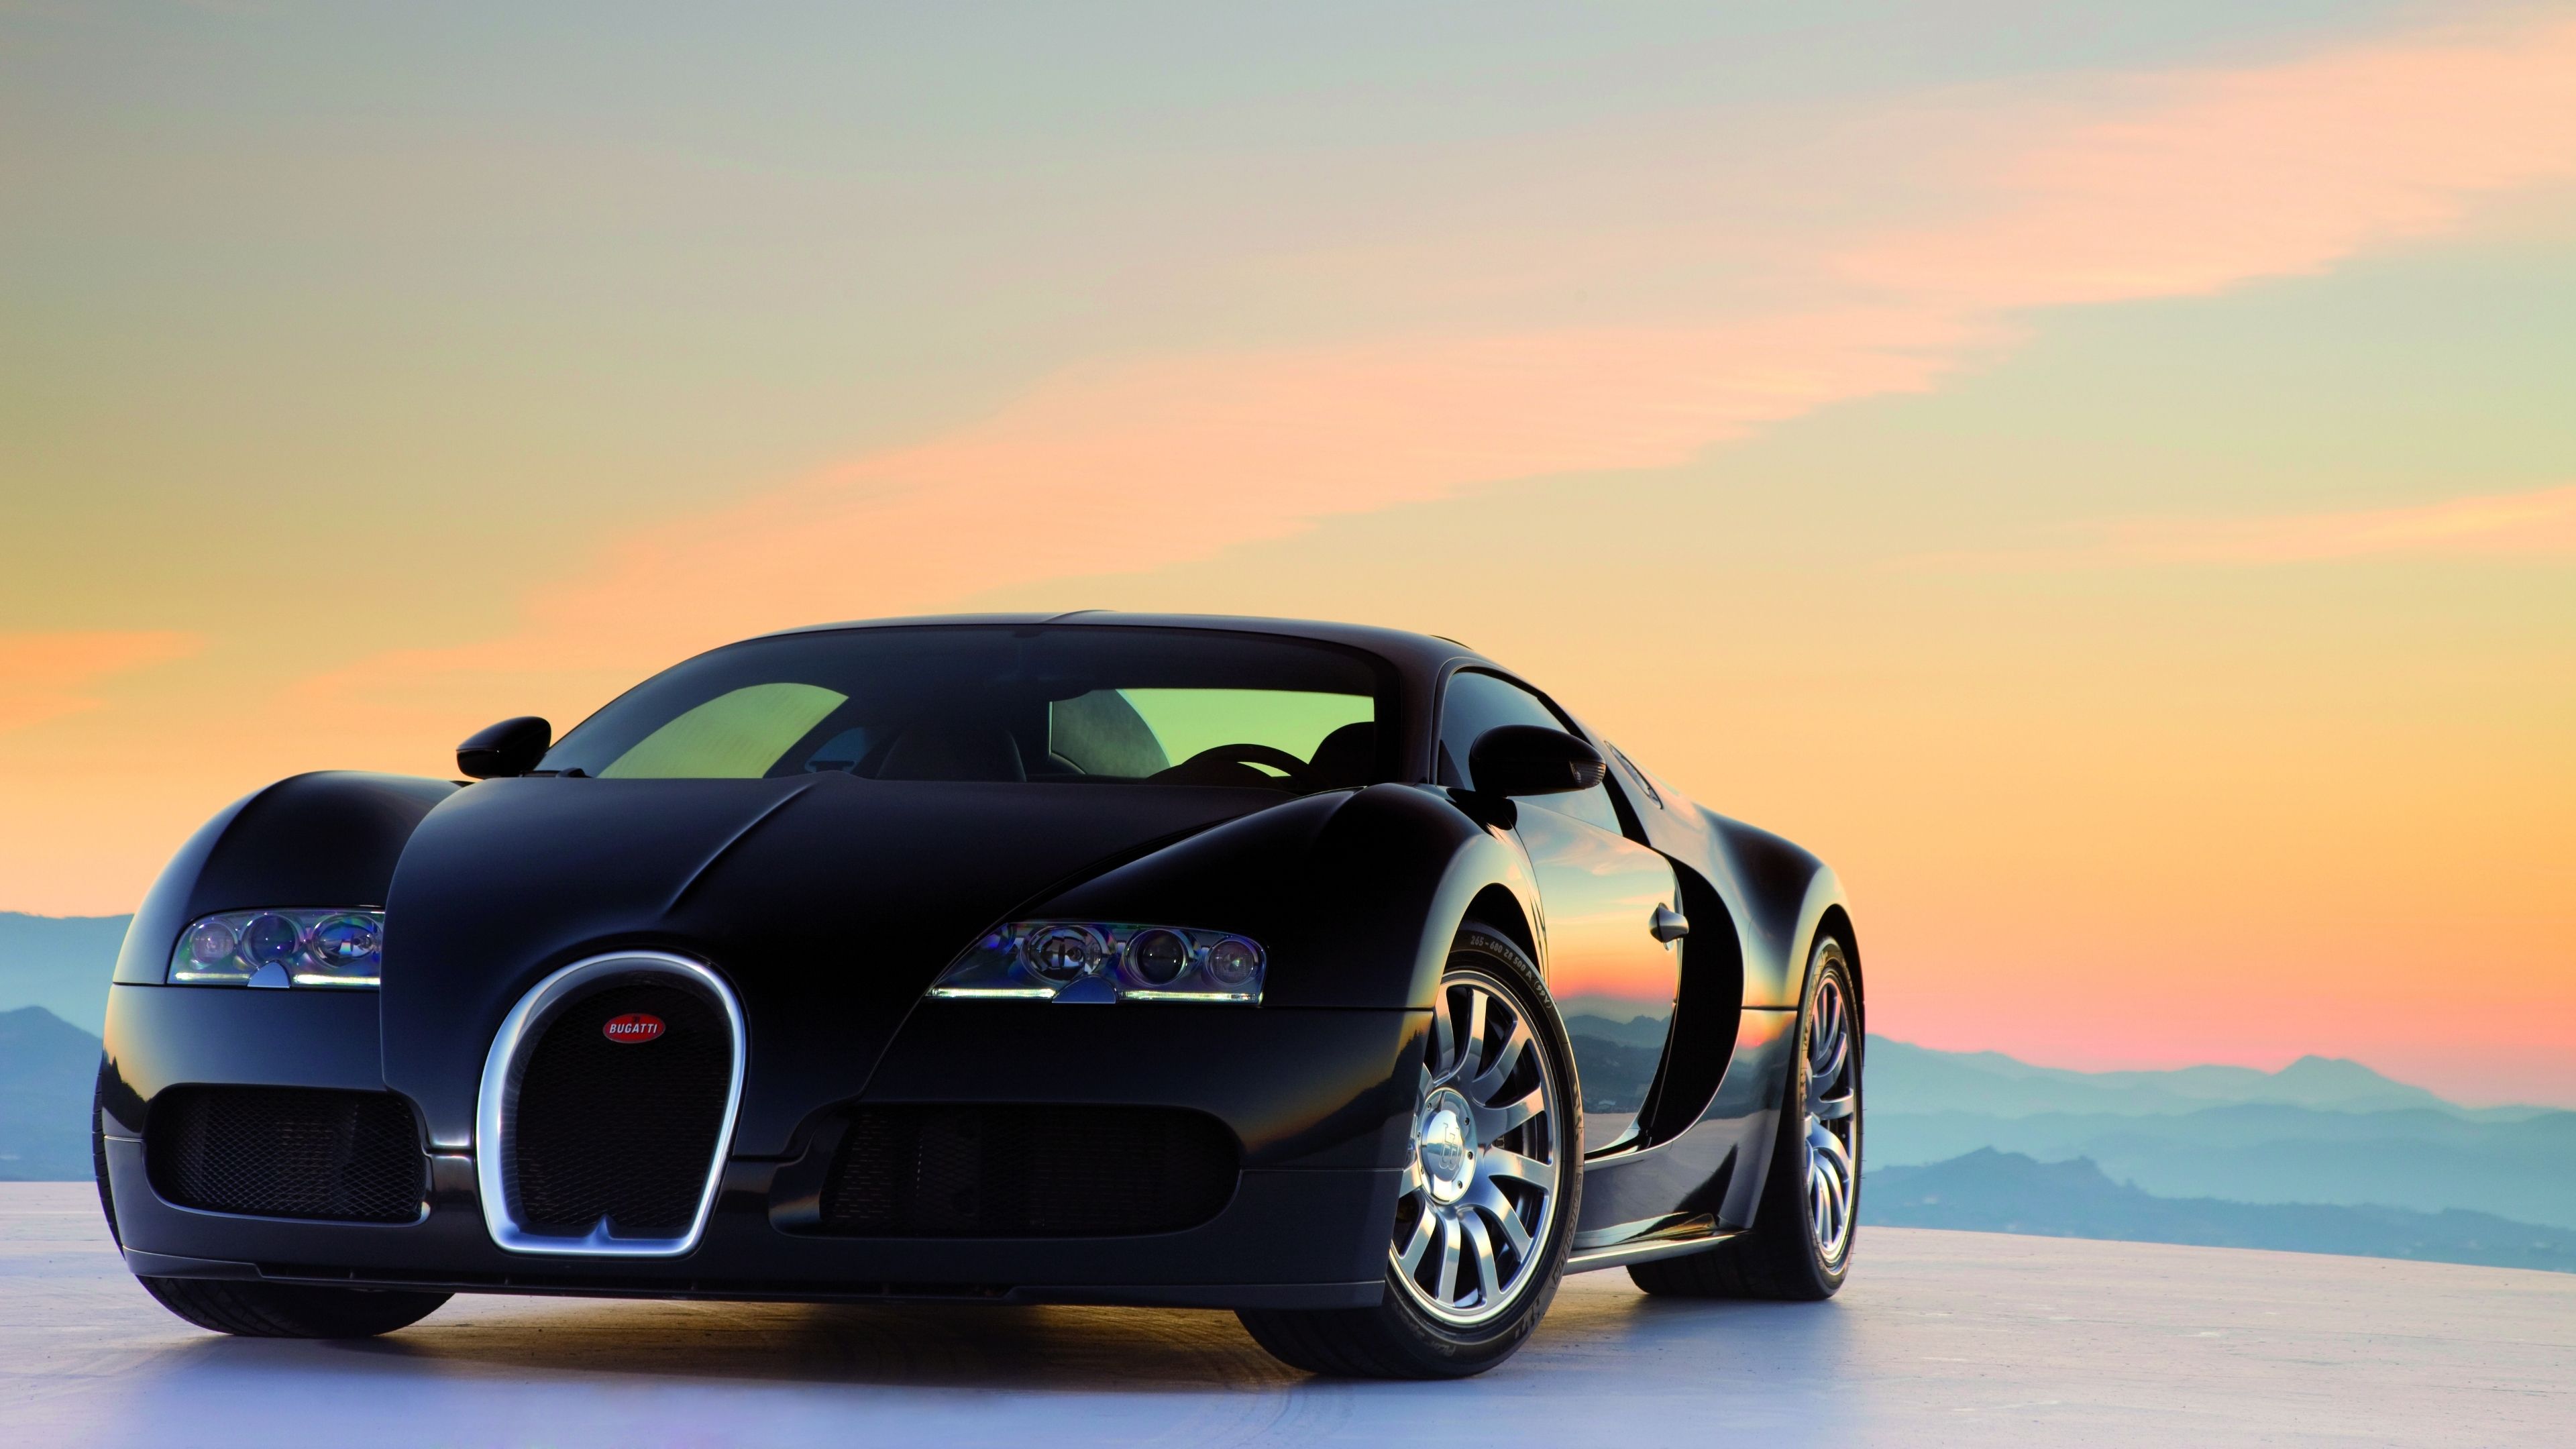 Bugatti Veyron Wallpaper Image E0i Cars